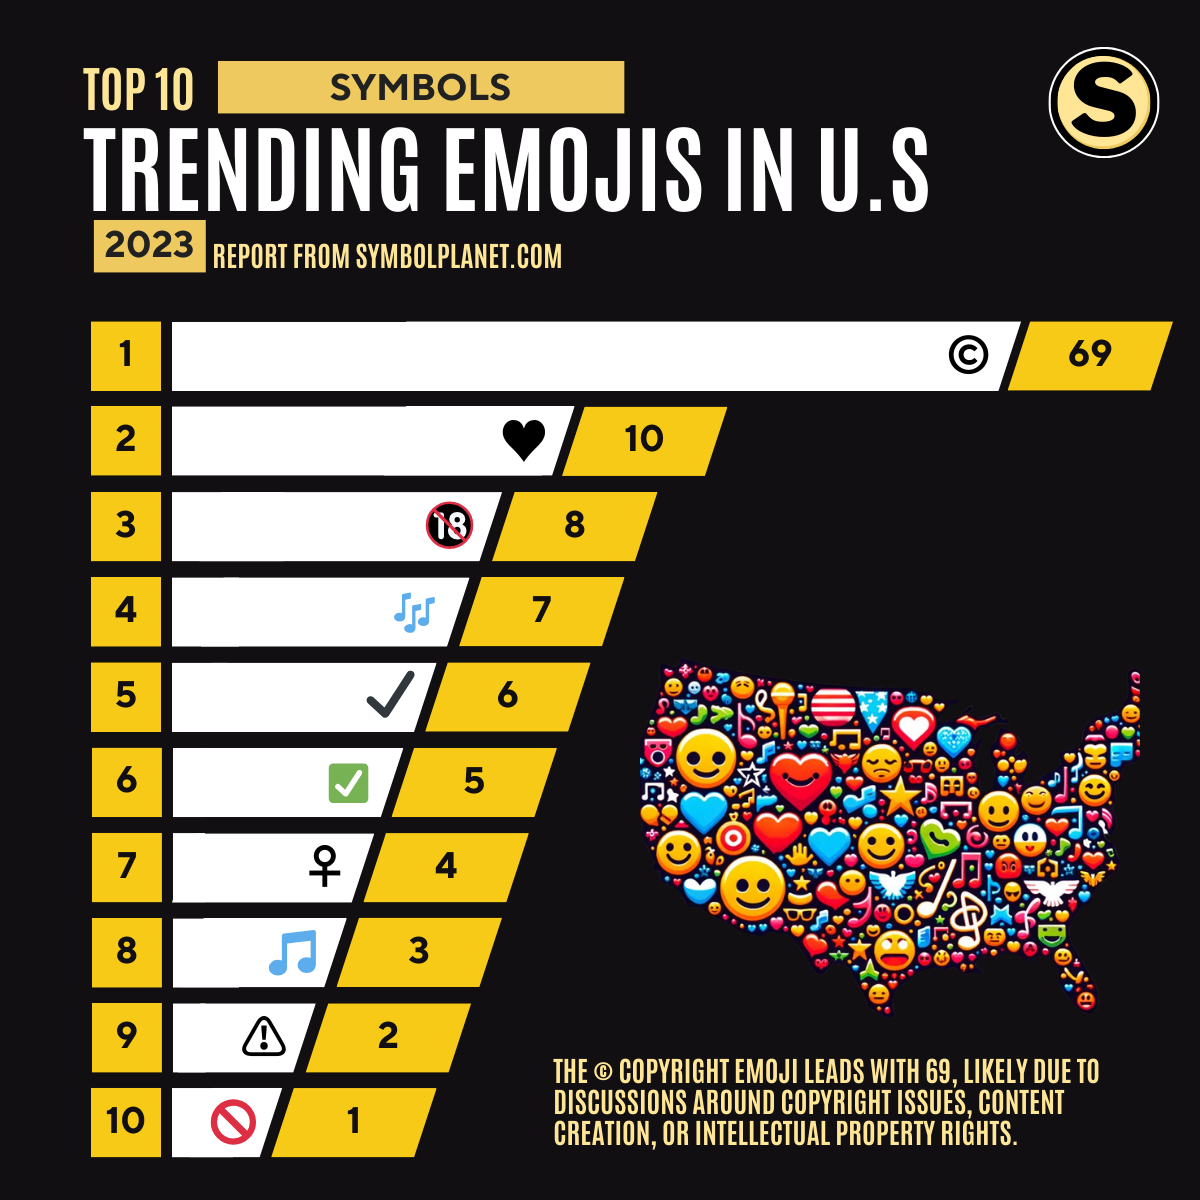 Top 10 Trending (Symbols) Emojis of 2023 in the United States